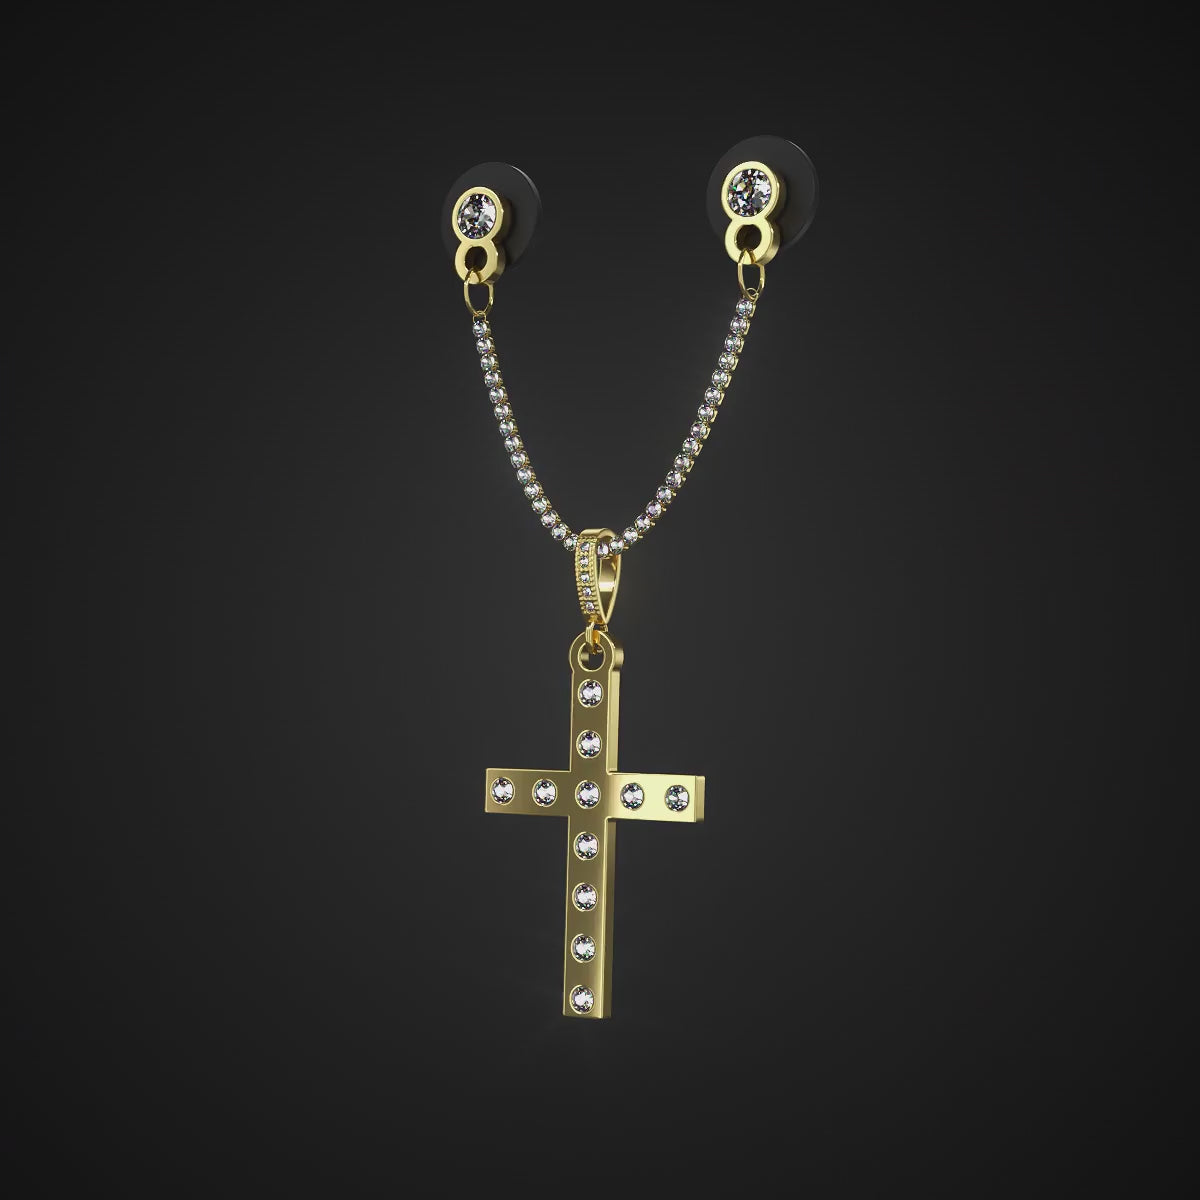 Gold cross with diamonds BMX-chain pin – BeisbolMXShop